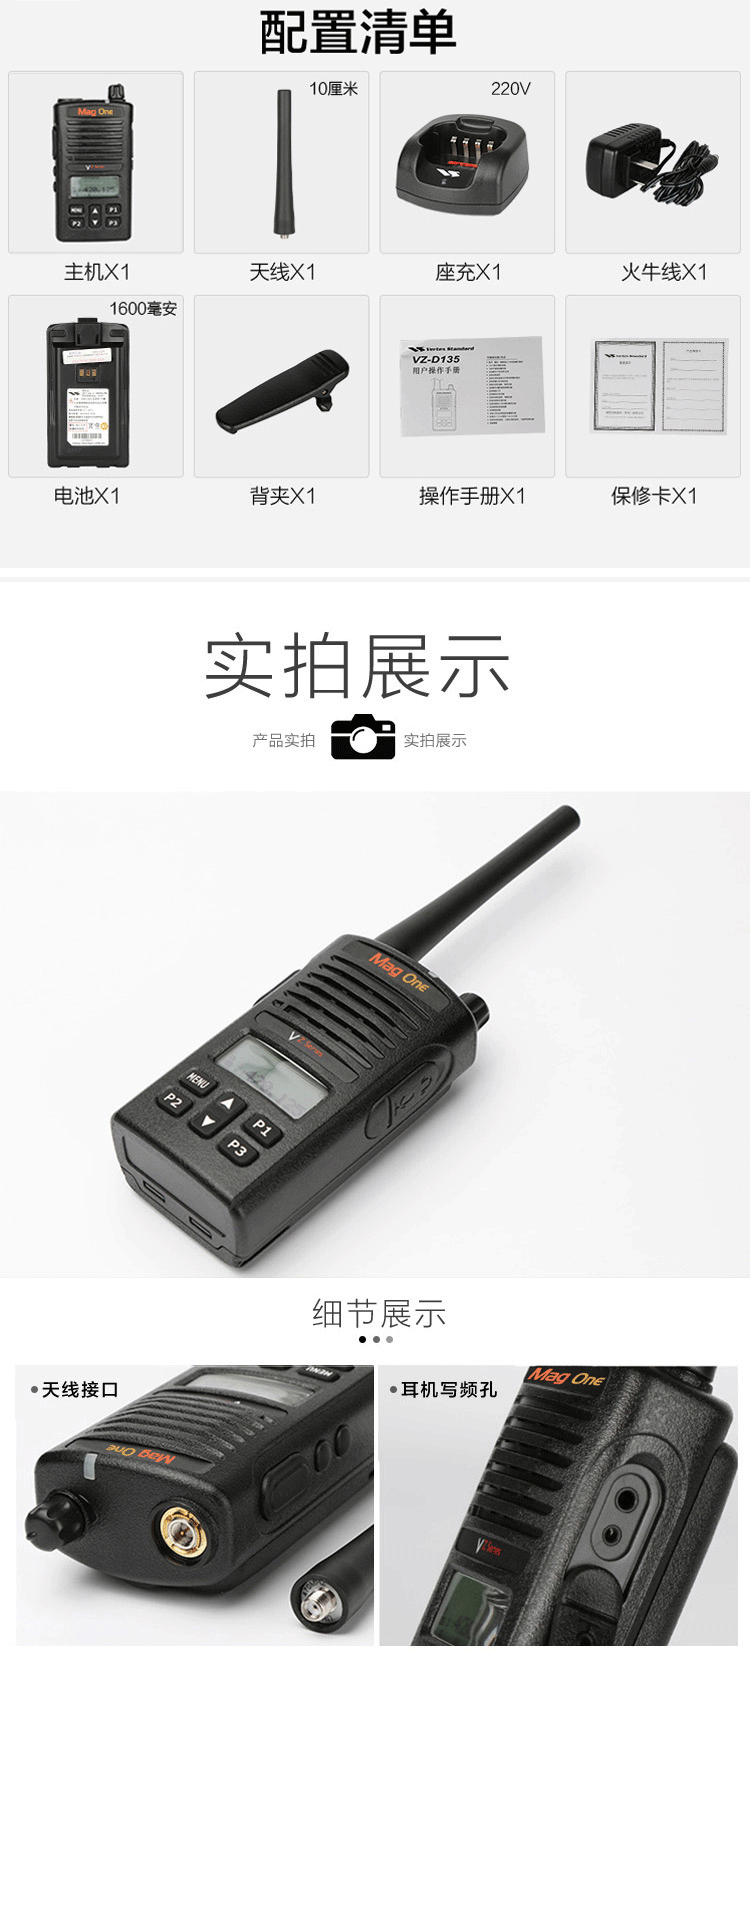 MAG ONE VZ-D135数字便携式对讲机